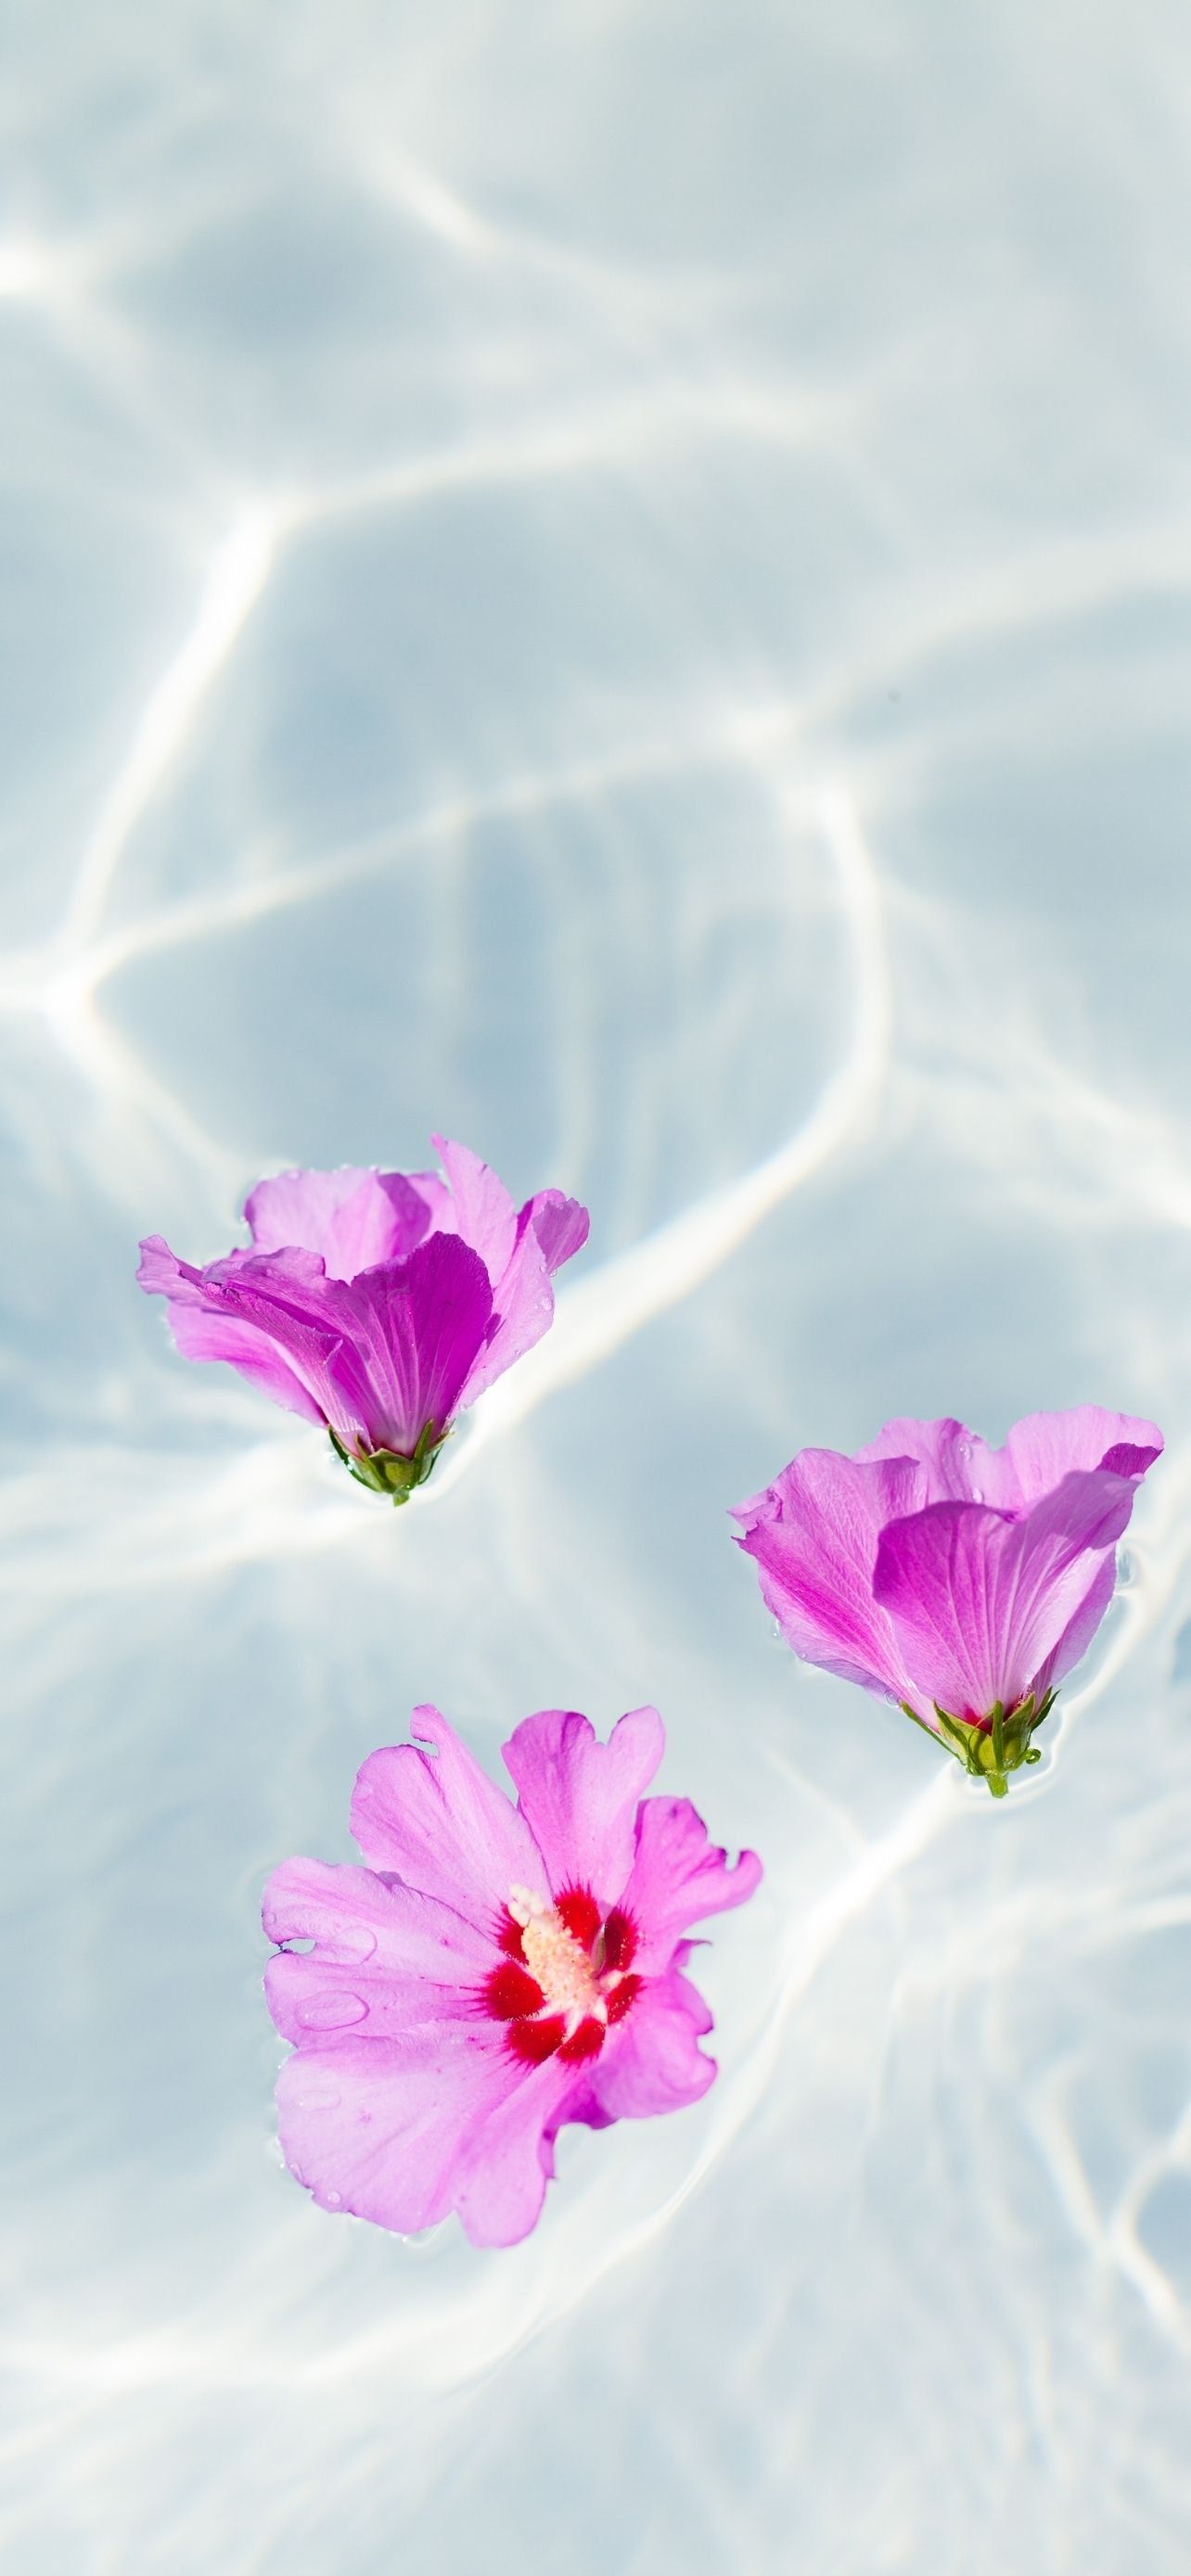 Purple flowers floating in a pool of water - HD